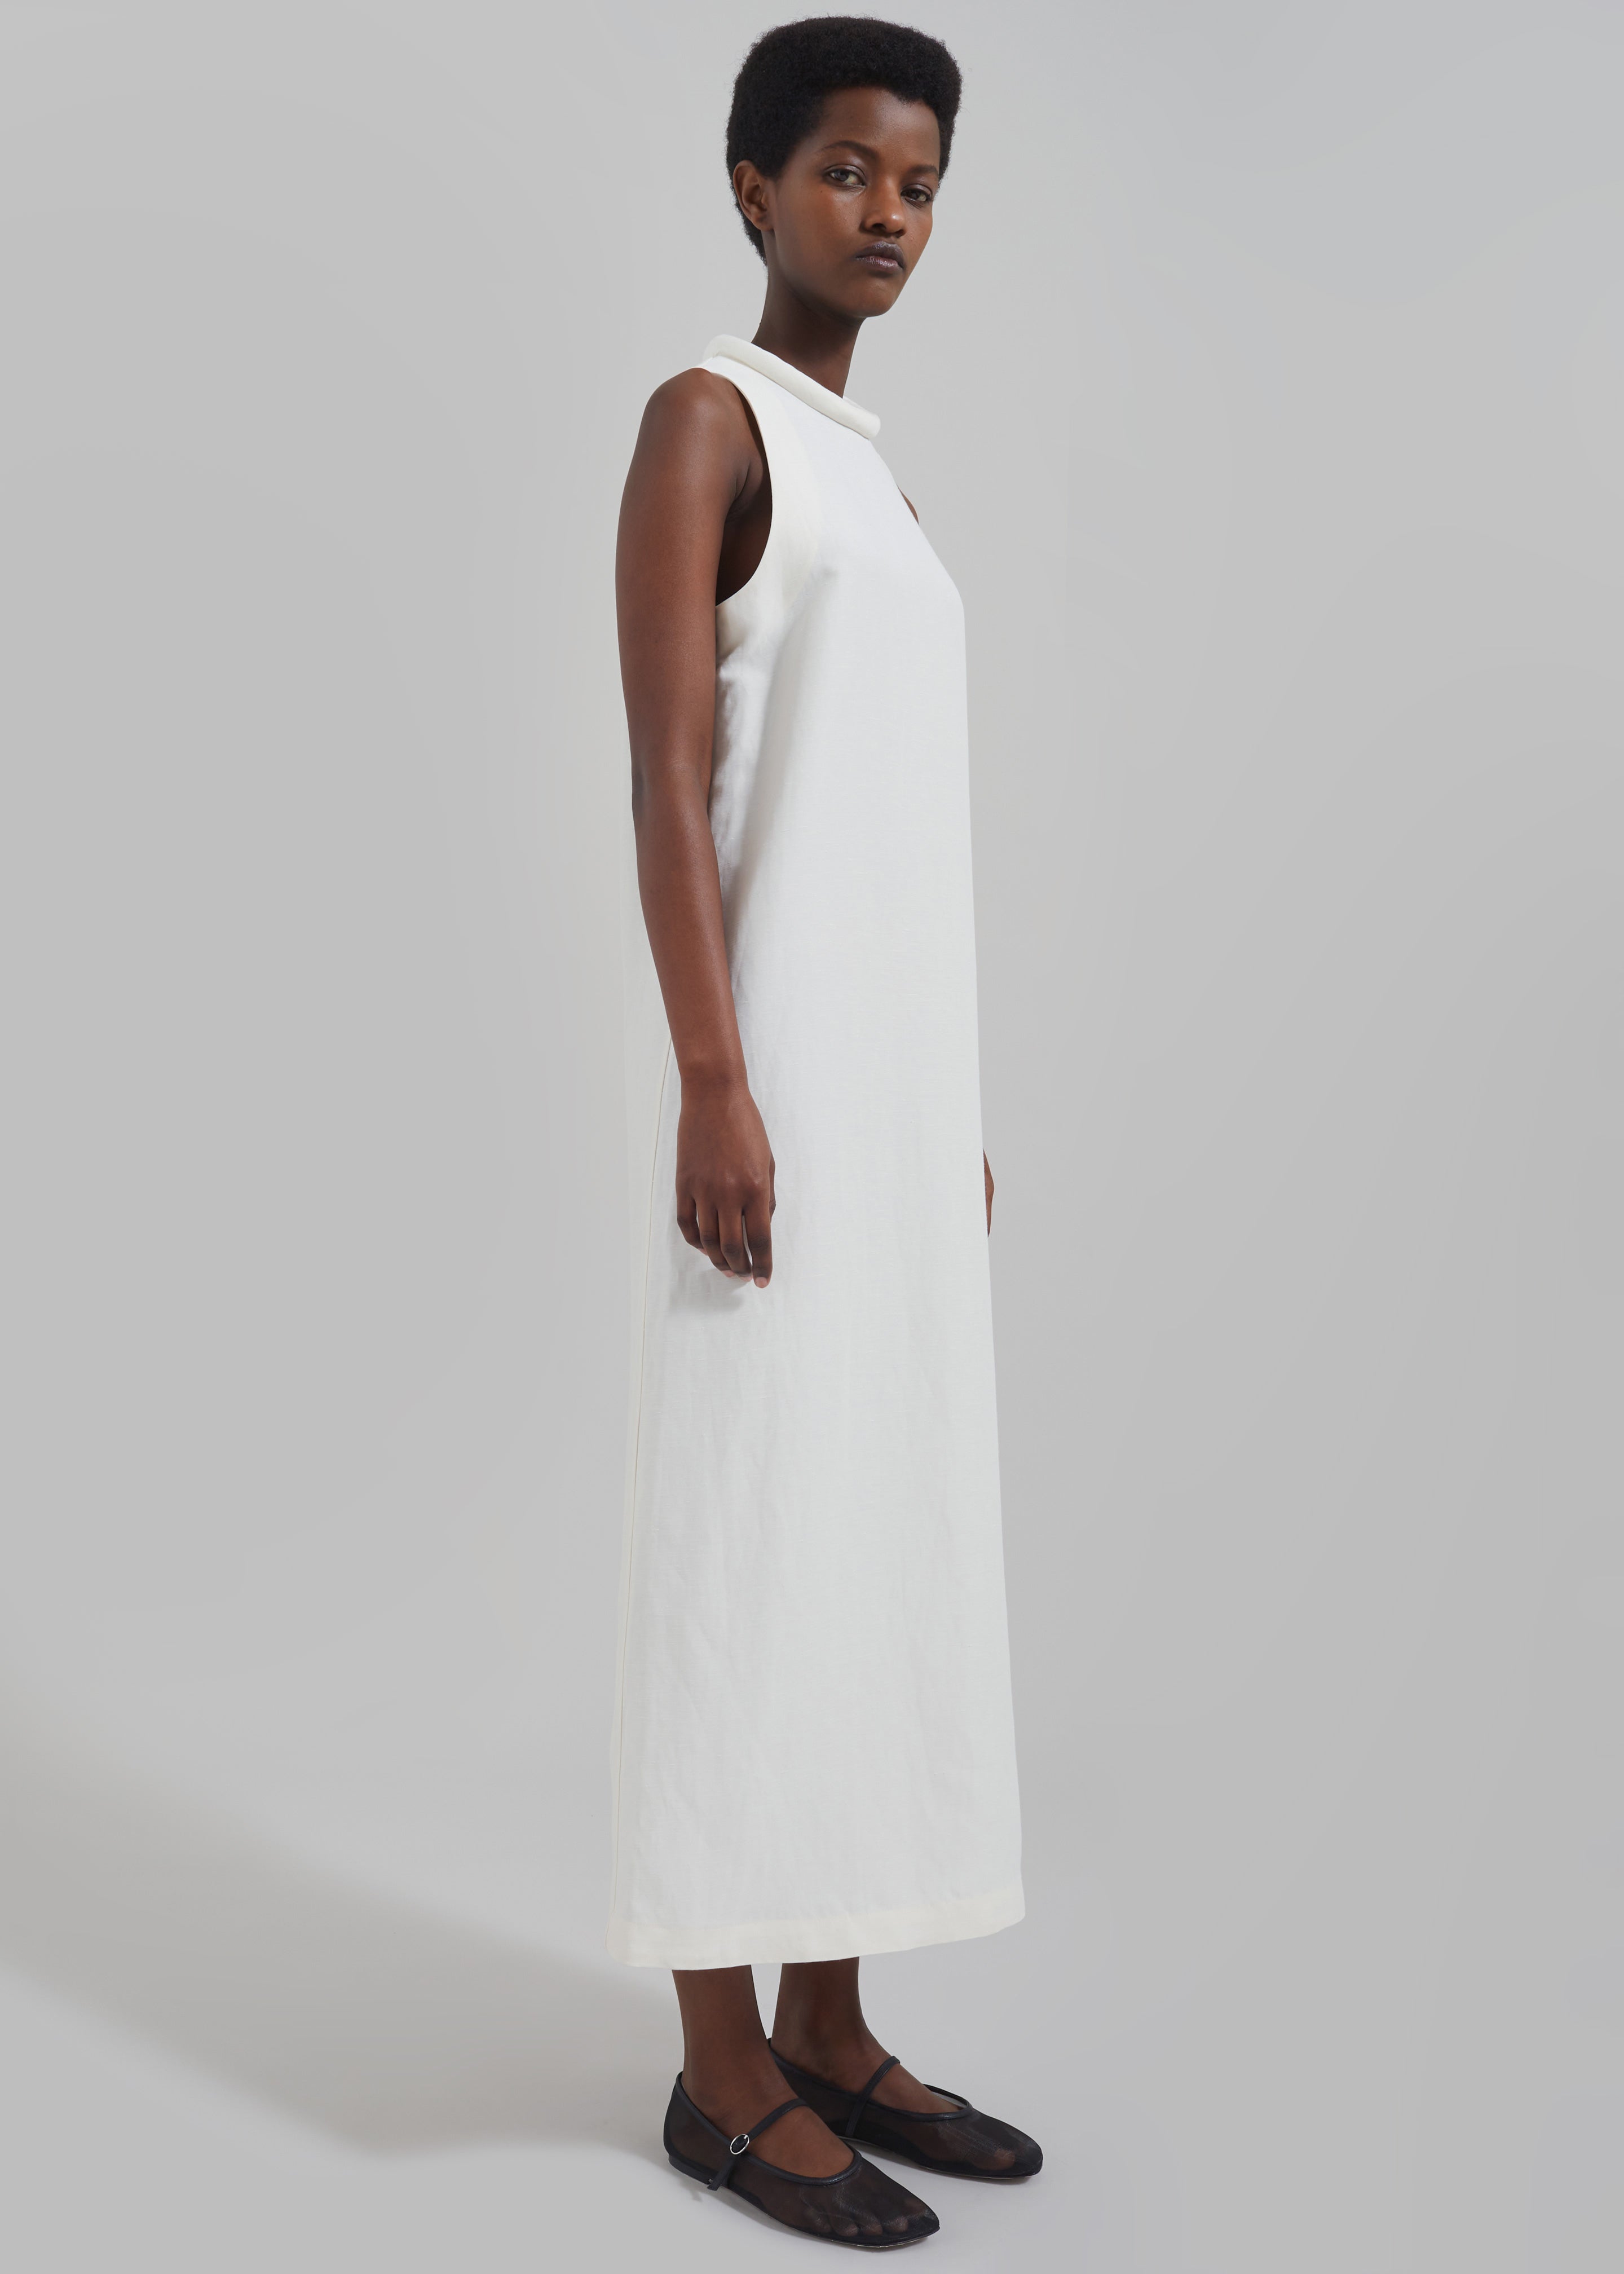 Loulou Studio Rivida Mixed Linen Dress - Ivory - 4